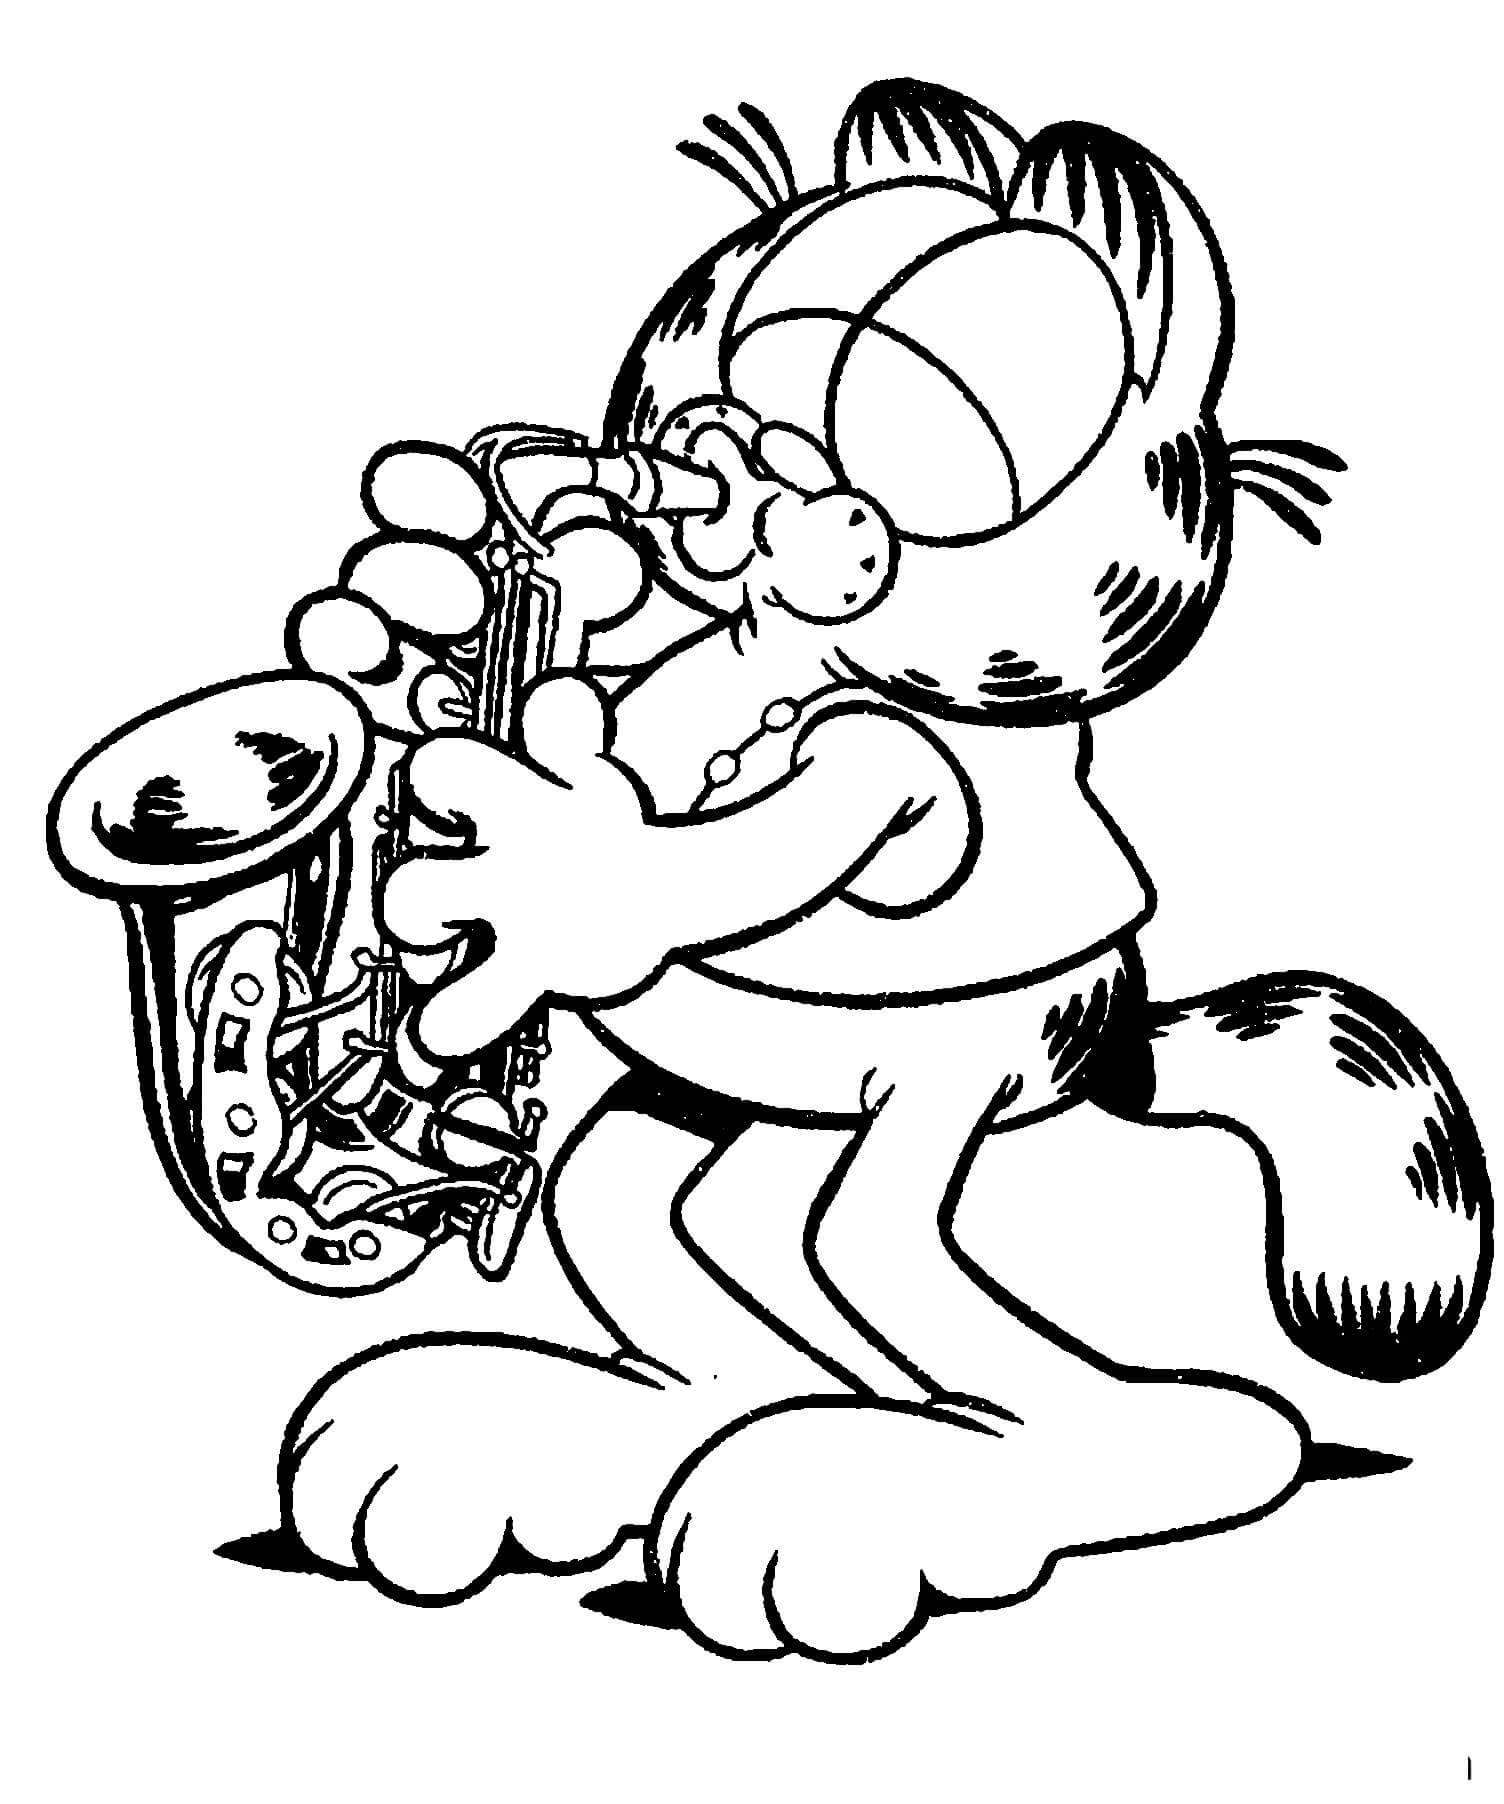 Garfield speelt saxofoon